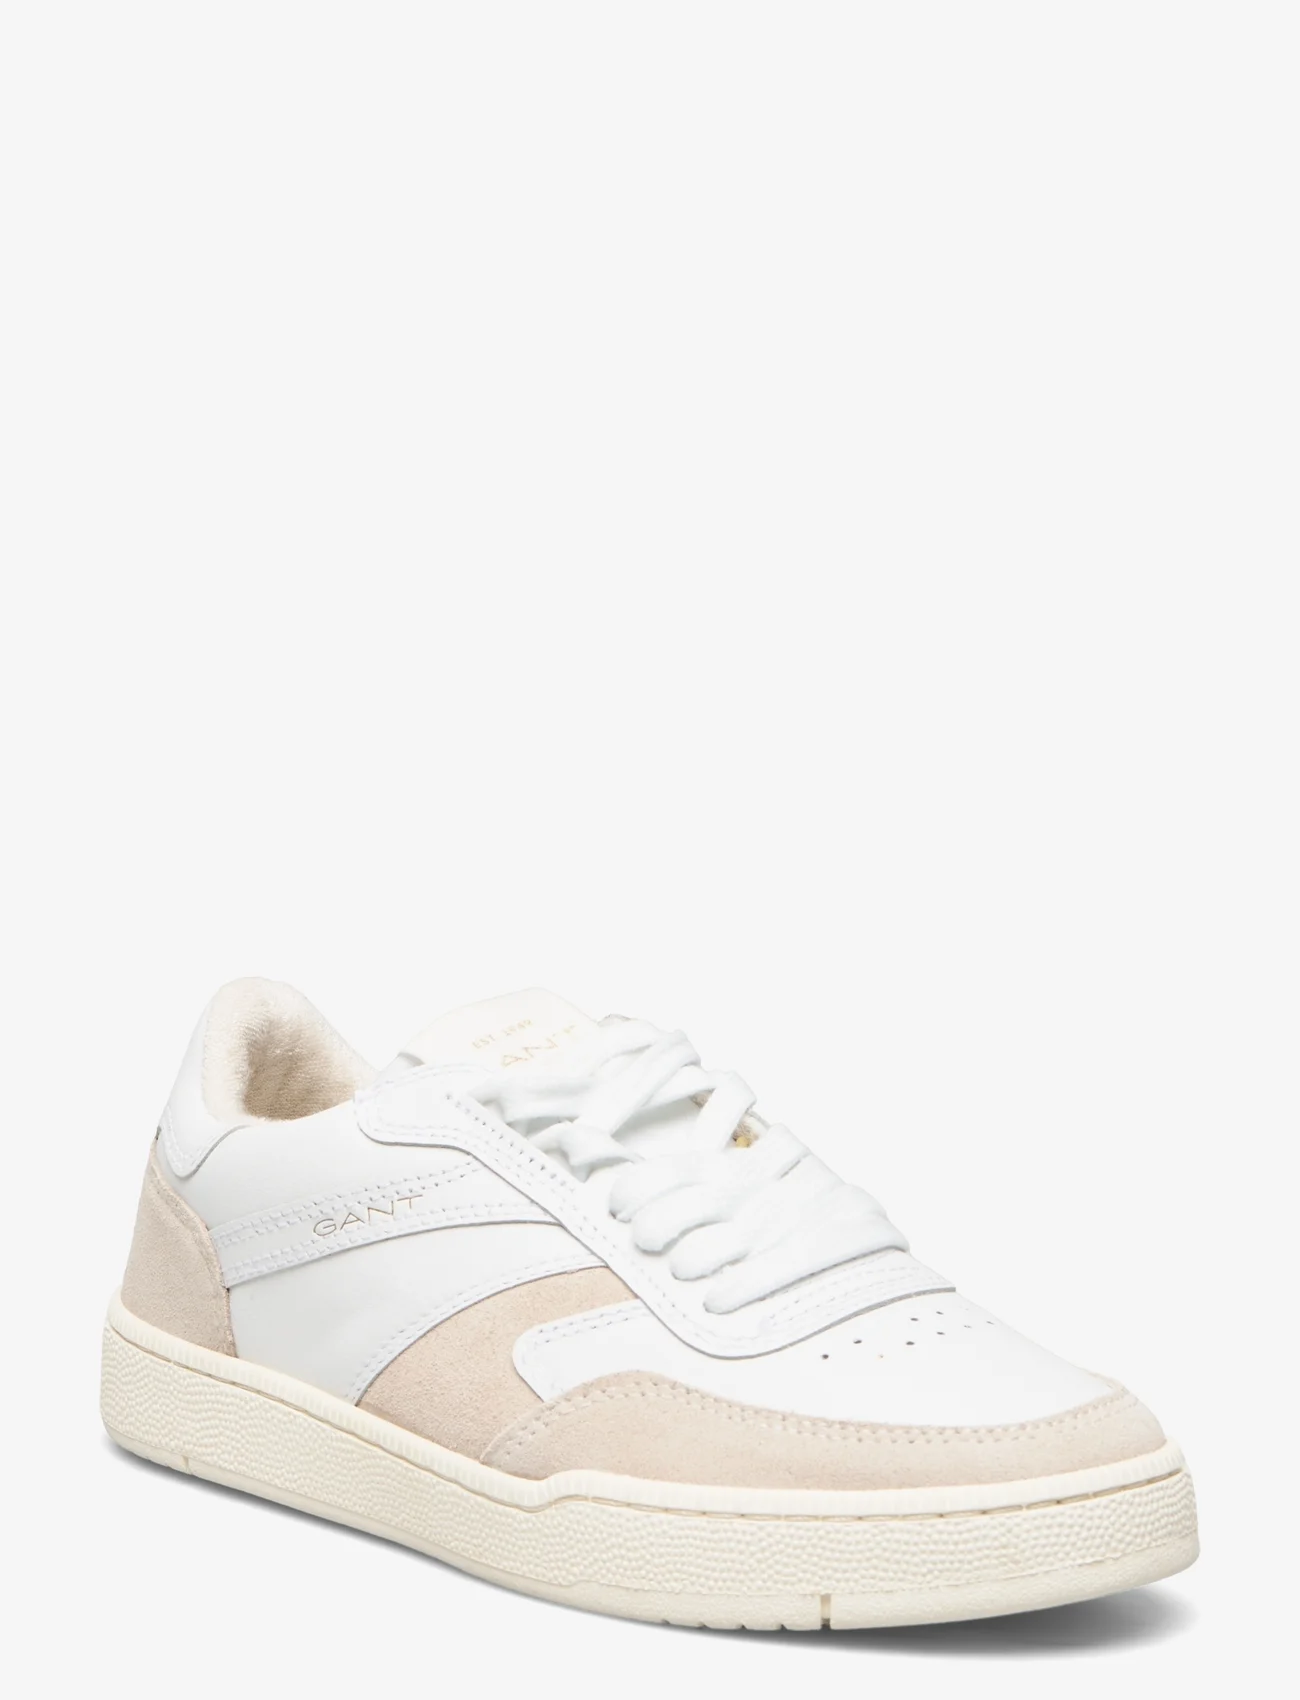 GANT - Evoony Sneaker - white/beige - 0